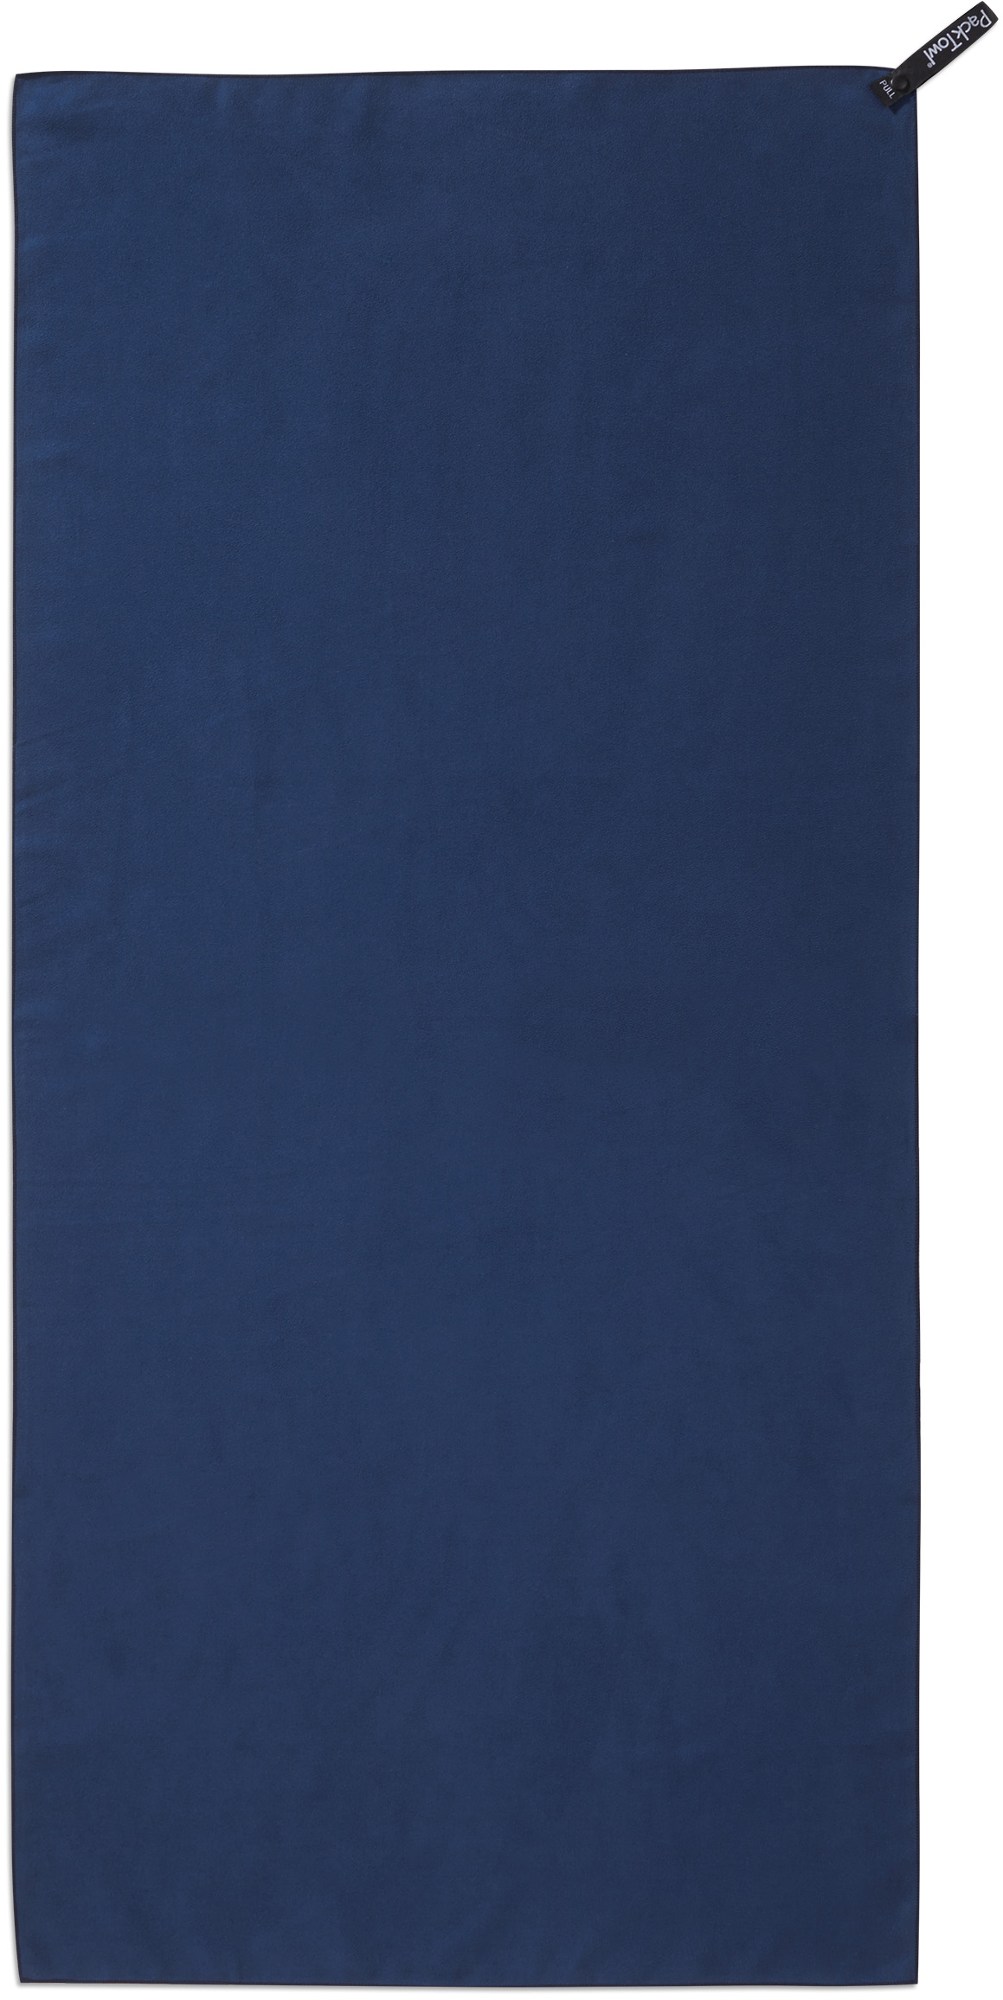 Личное полотенце PackTowl, синий одноразовое полотенце 20 50 шт прессованное полотенце портативное полотенце для лица для путешествий на открытом воздухе полотенце для ли